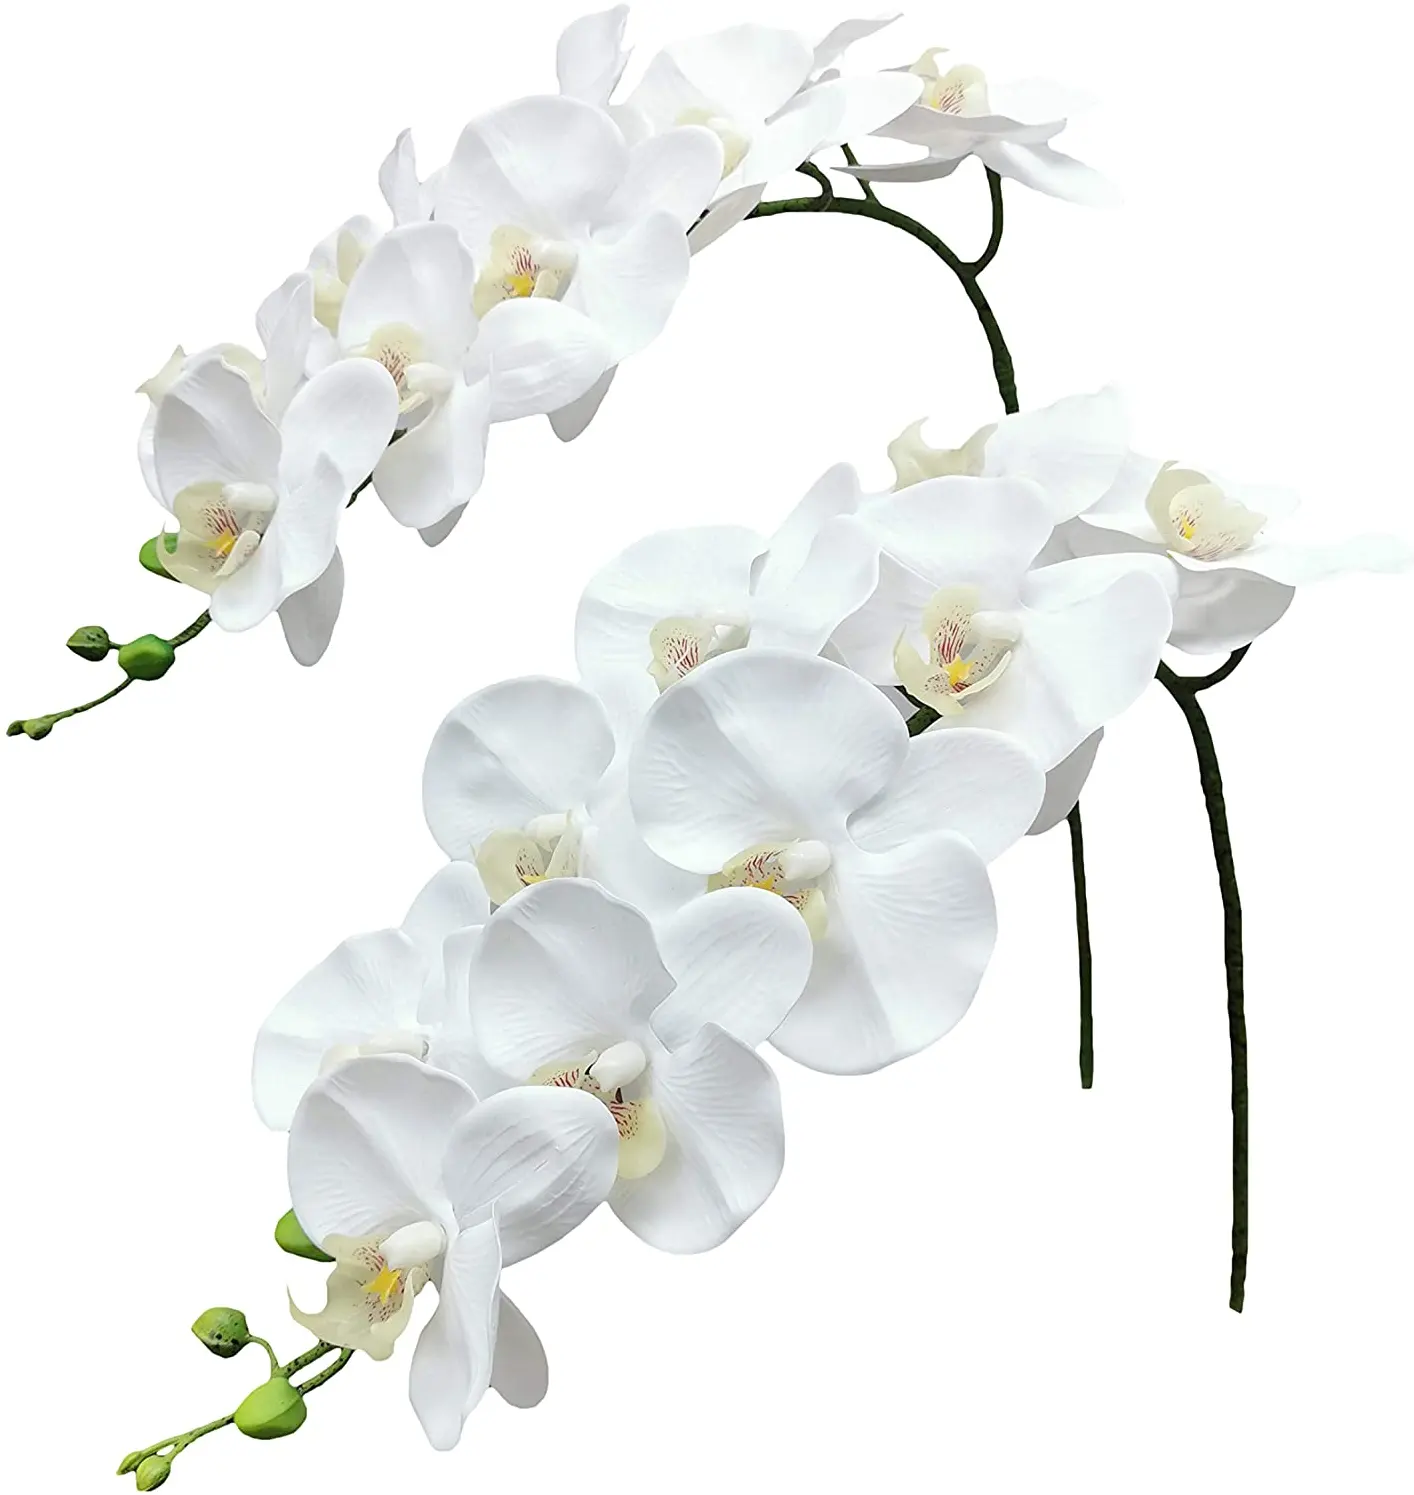 Bunga anggrek buatan bunga asli sentuhan lateks Faux Phalaenopsis cabang 9 besar mekar 28 inci 2pcs putih